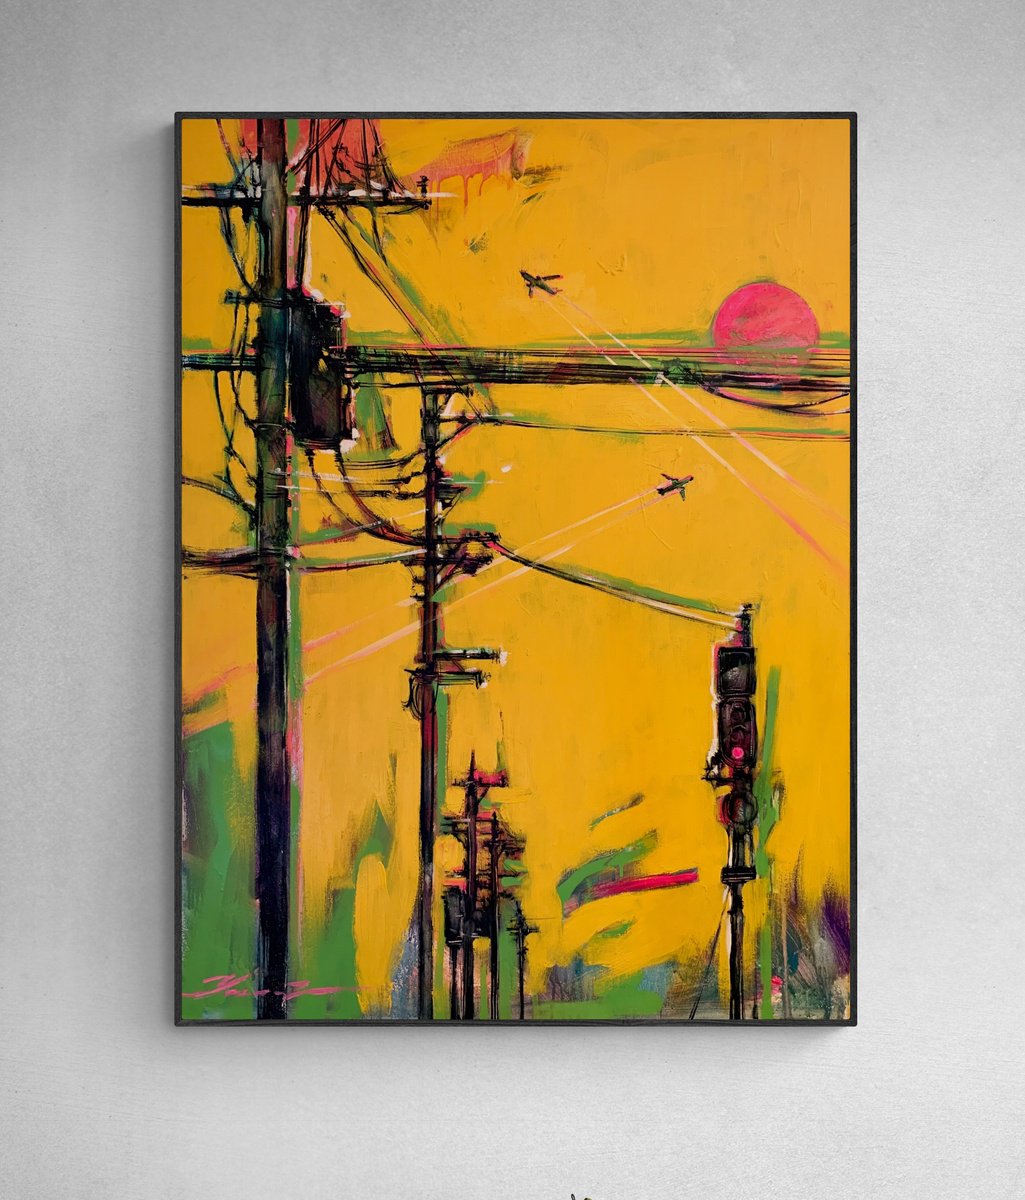 Pink wires- Street art - Diptych - Electric pole - Urban - Sunset by Yaroslav Yasenev